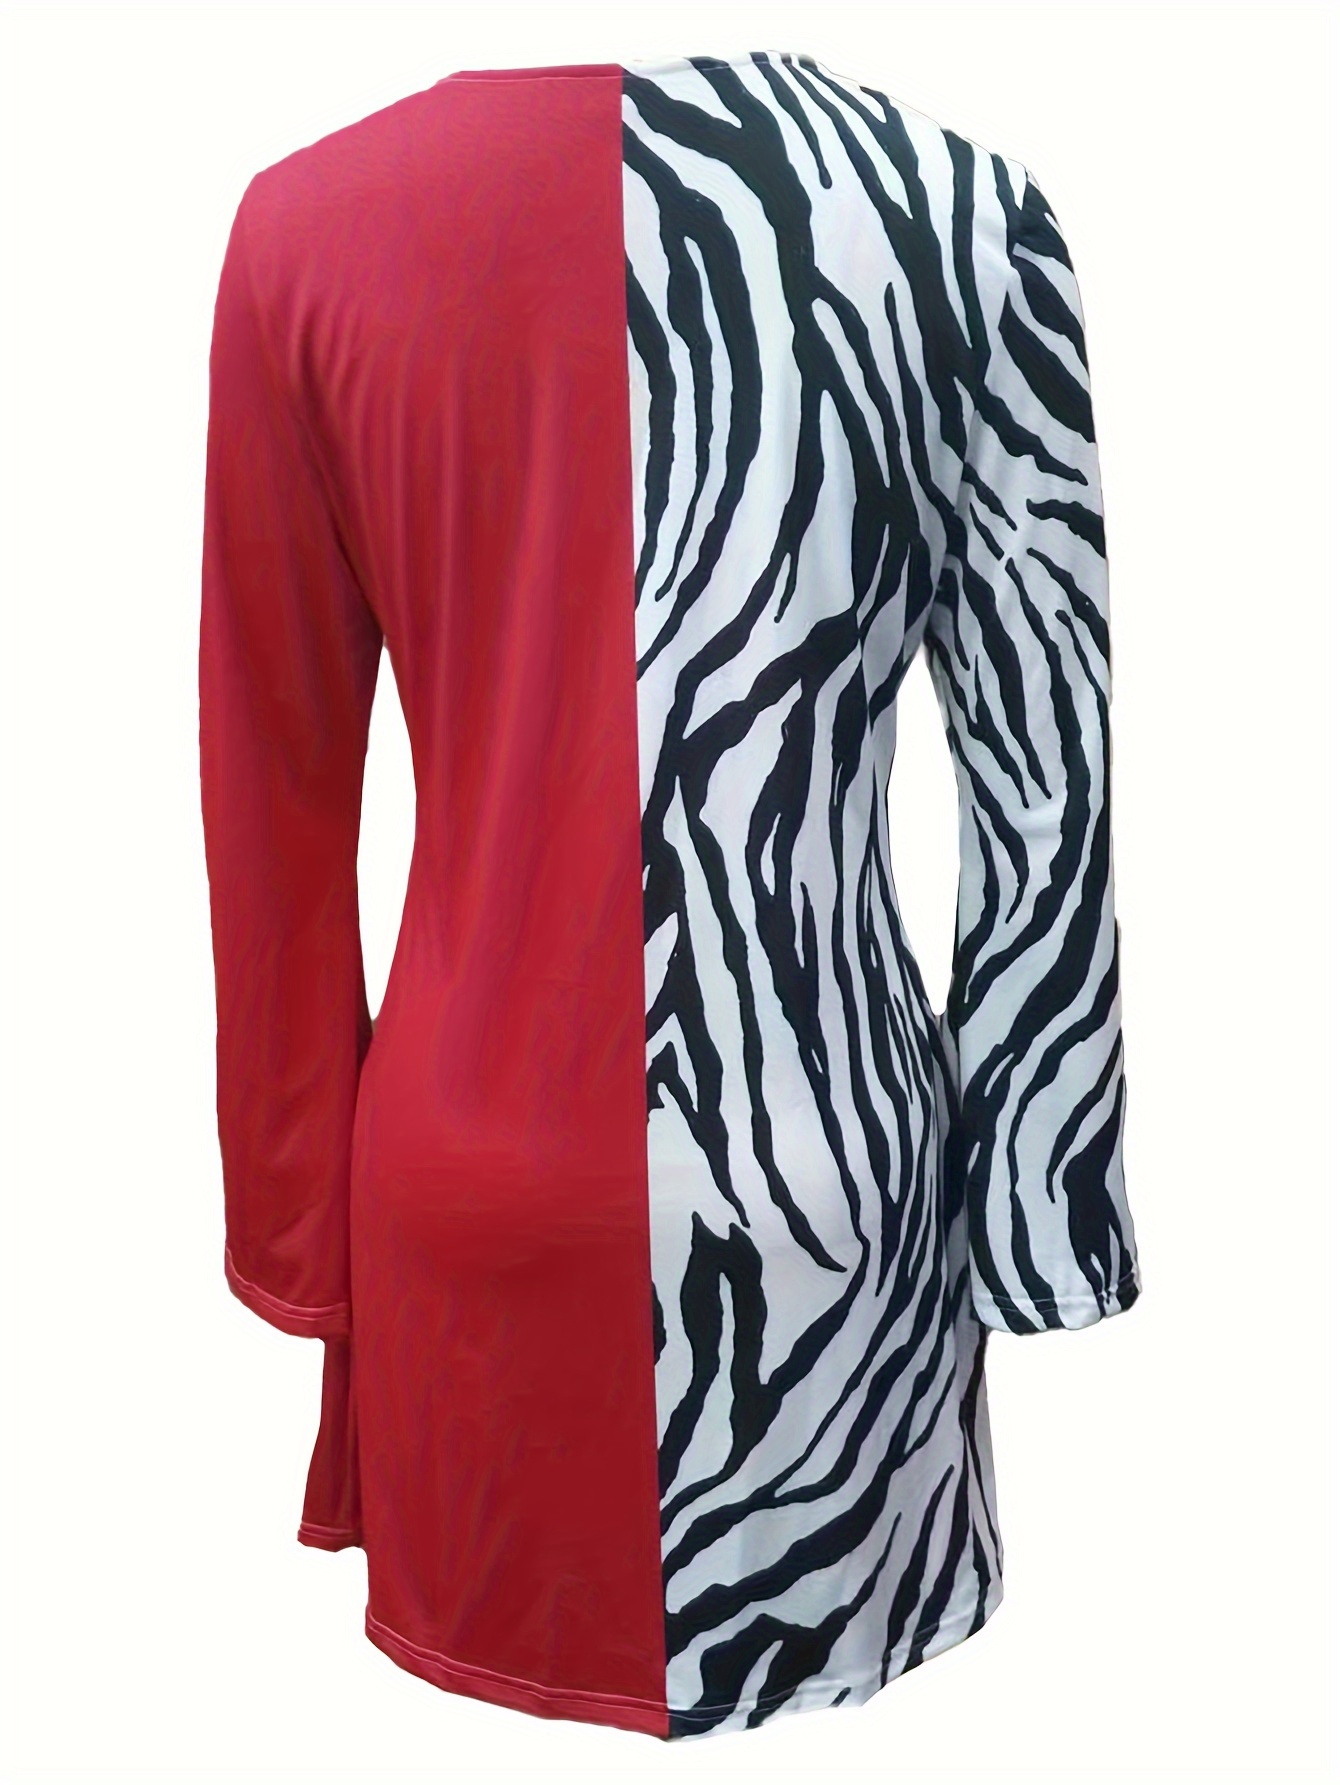 contrast zebra print dress casual flare sleeve dress womens clothing